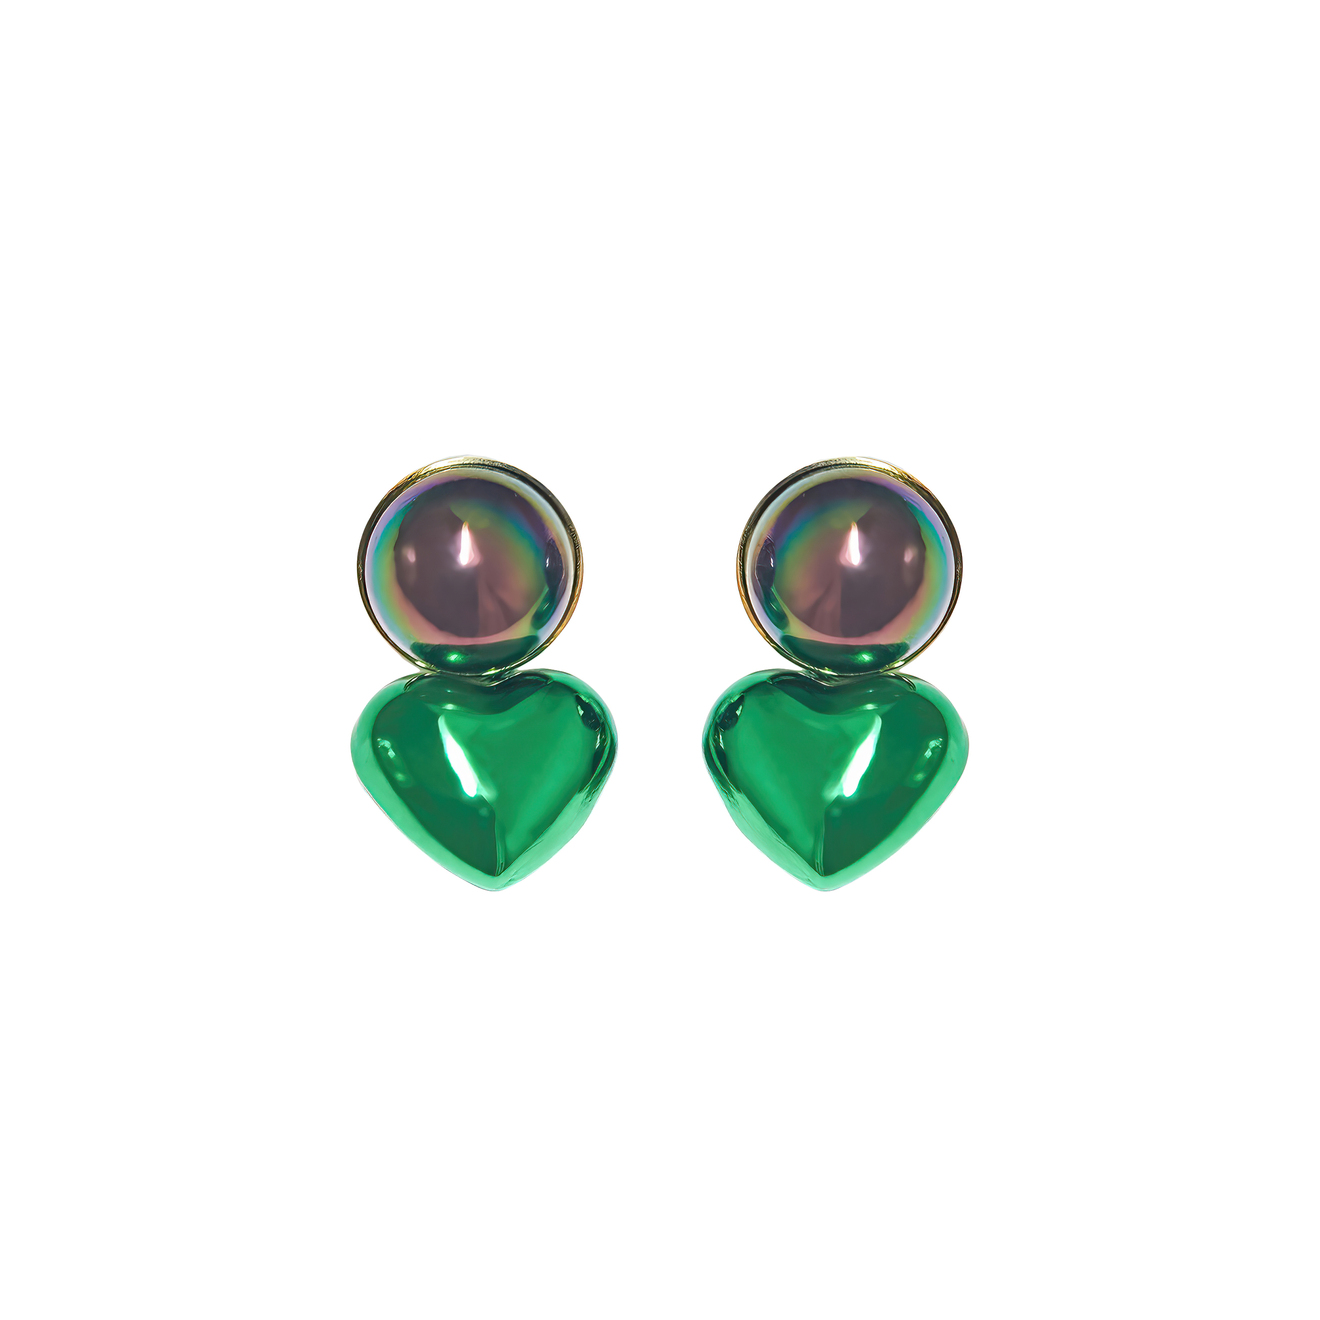 серьги сердца veruschka jewelry из мятого матового металла Free Form Jewelry Зеленые серьги-сердца с шариком